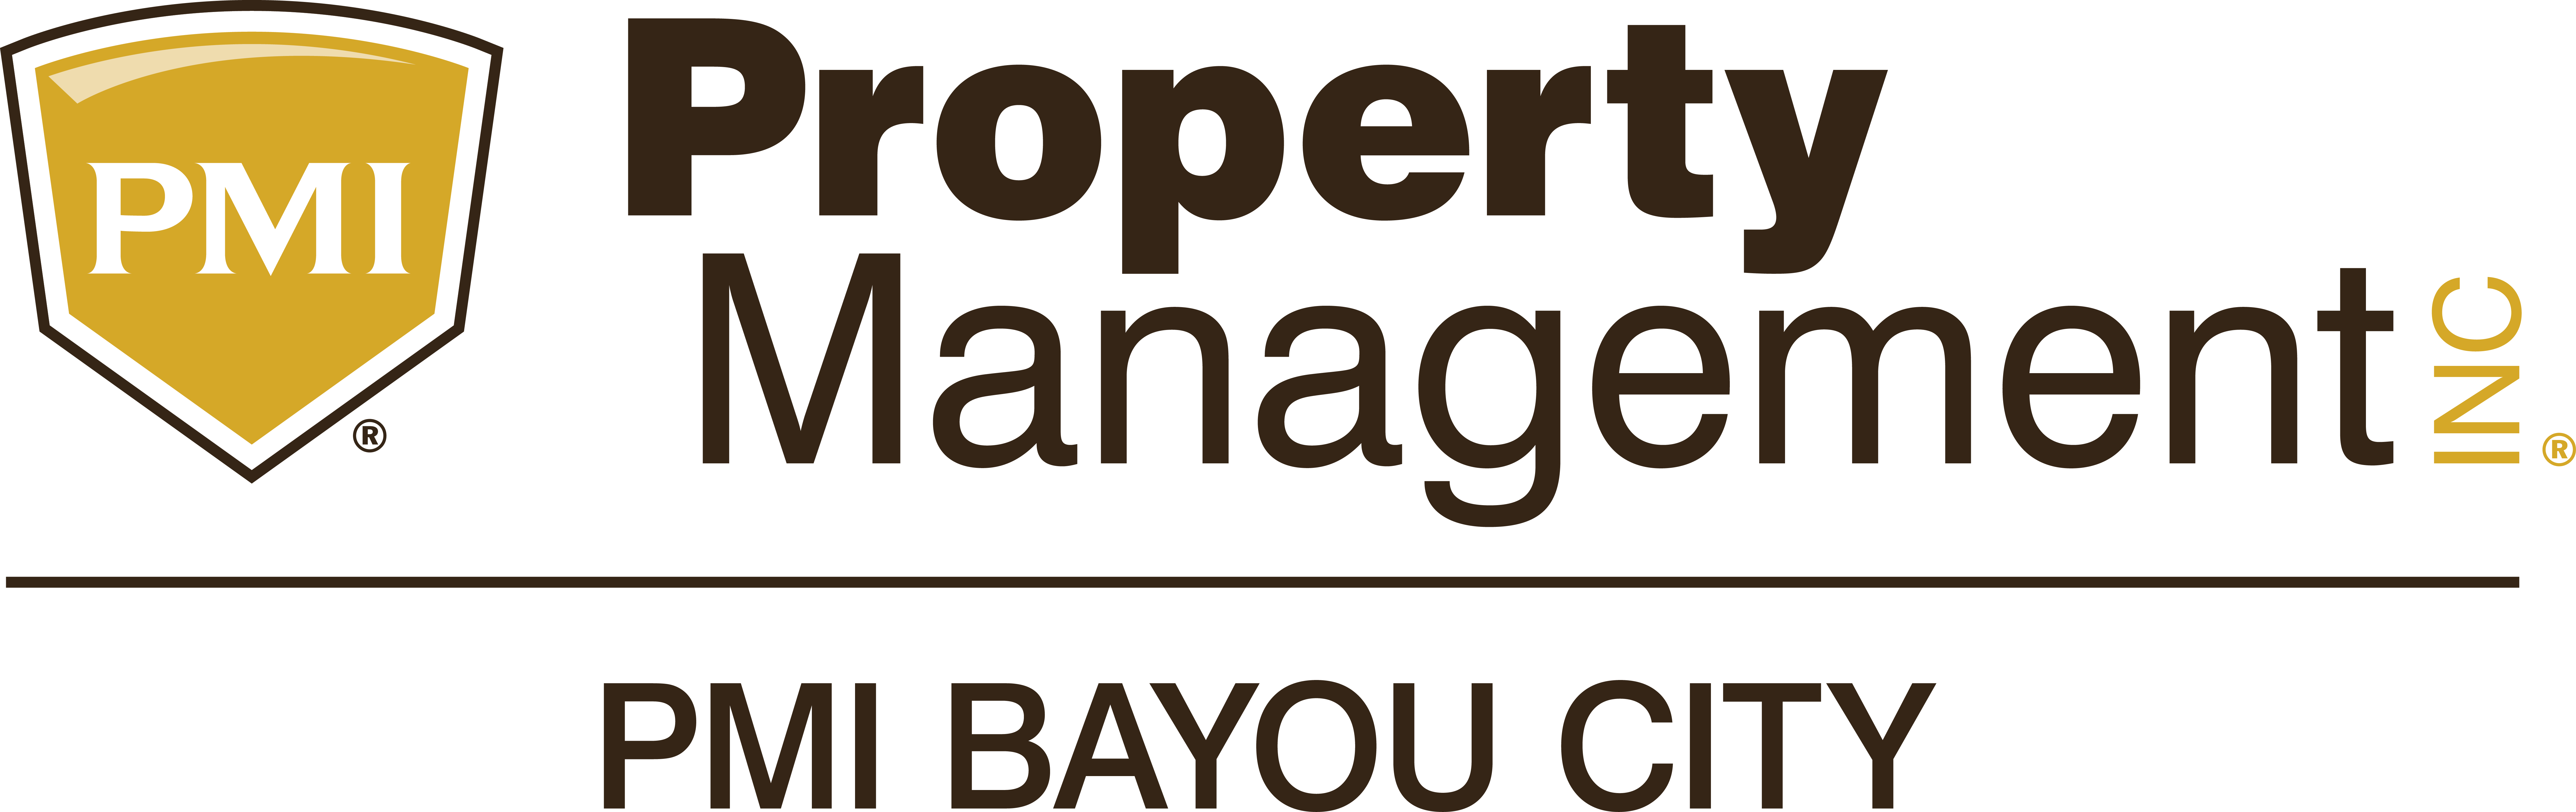 PMI-Bayou City logo